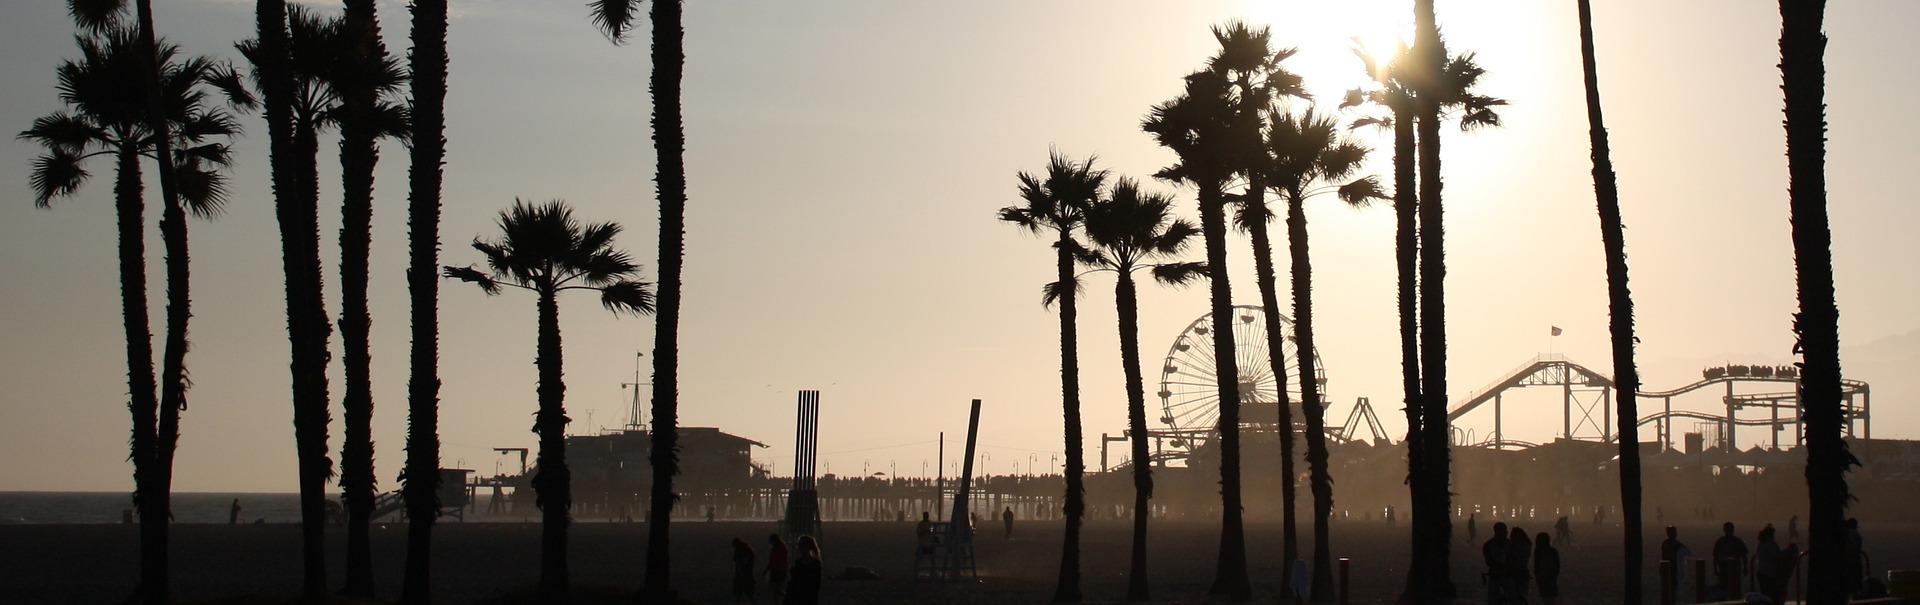 Location near Santa Monica at dawn